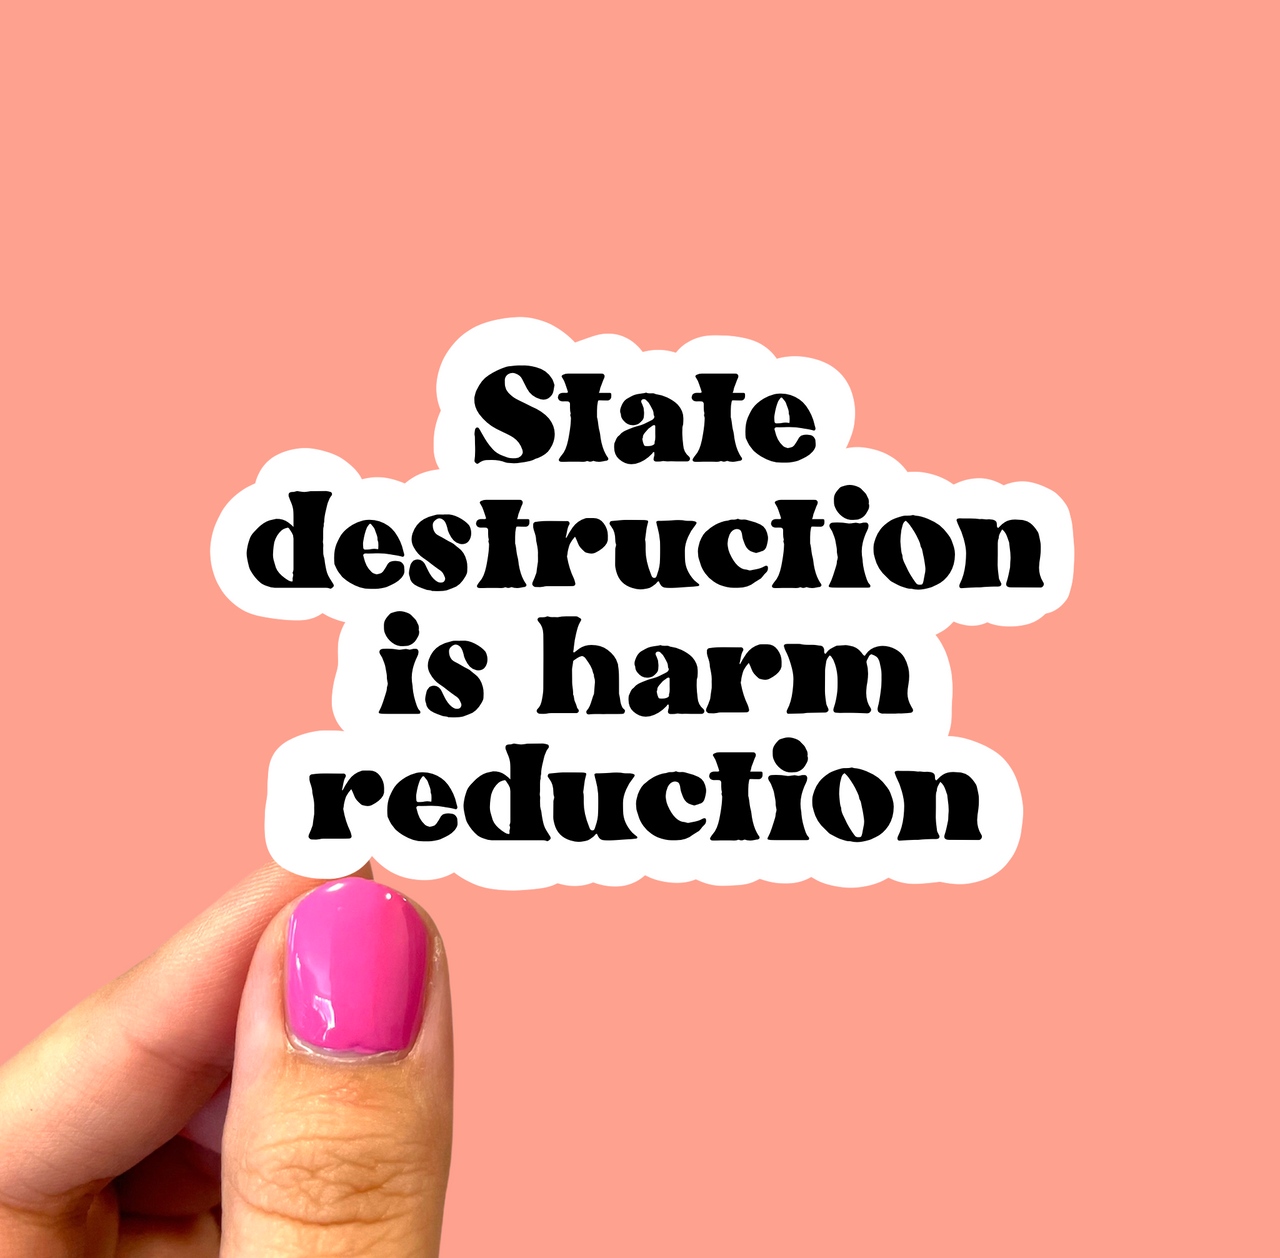 State destruction is harm reduction